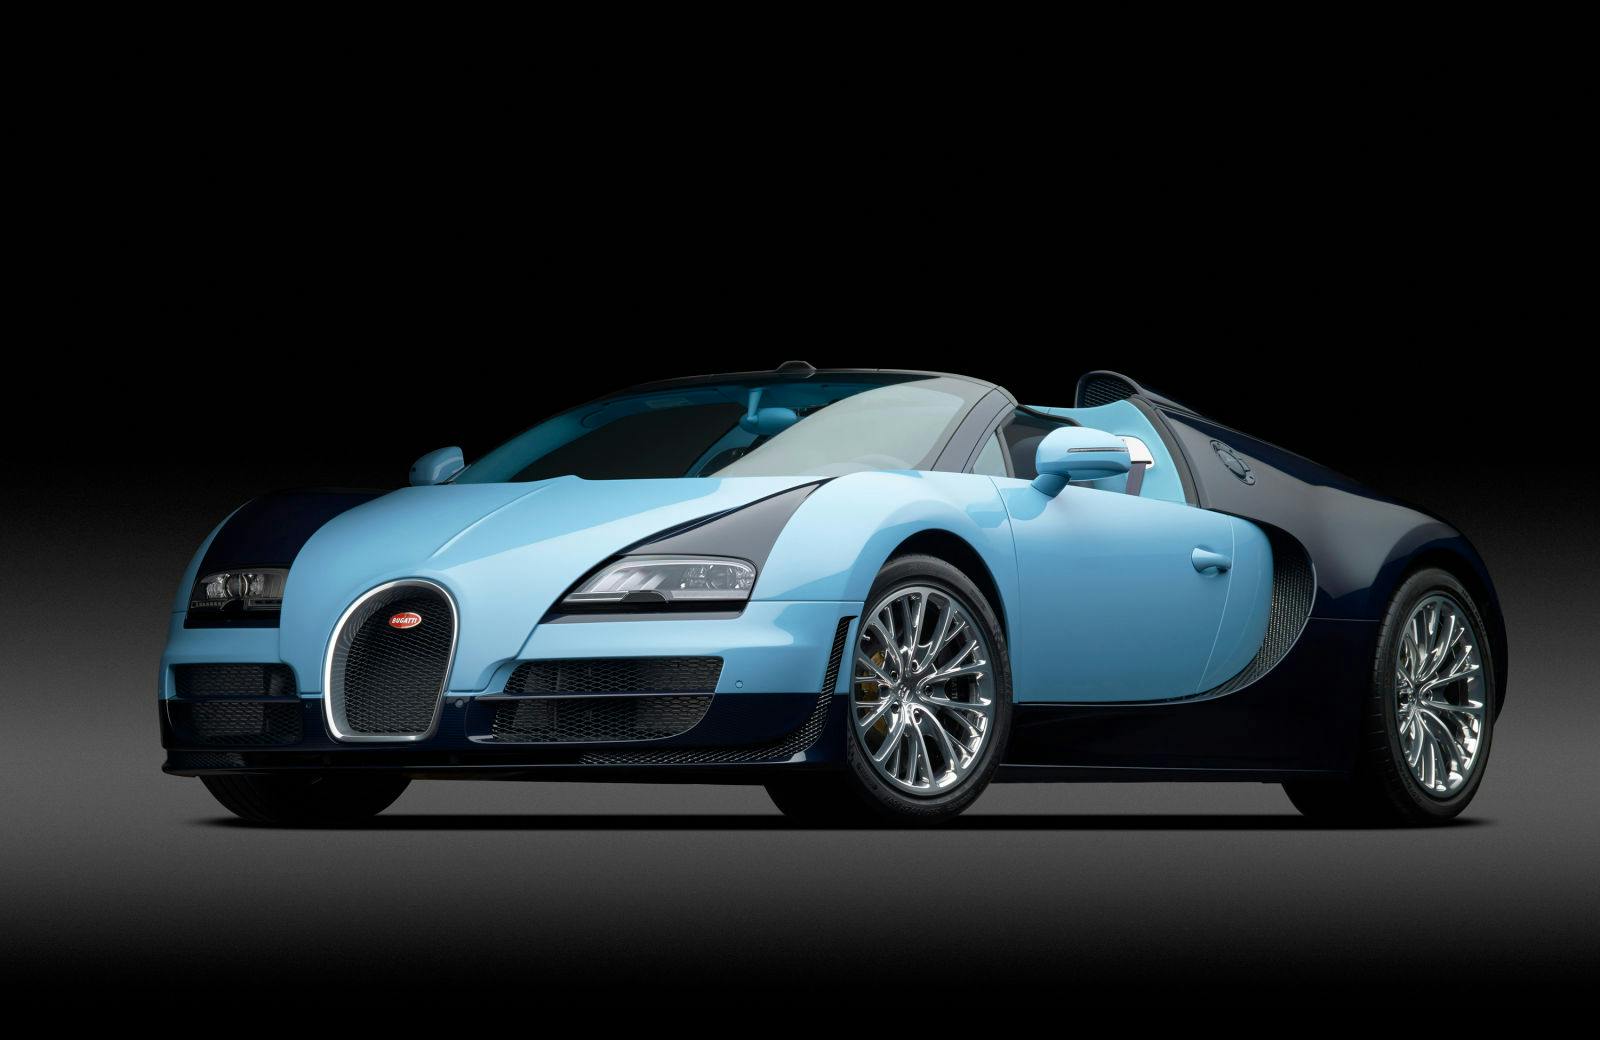 Bugatti Veyron 16.4 Grand Sport Vitesse “Jean Pierre Wimille” Edition.